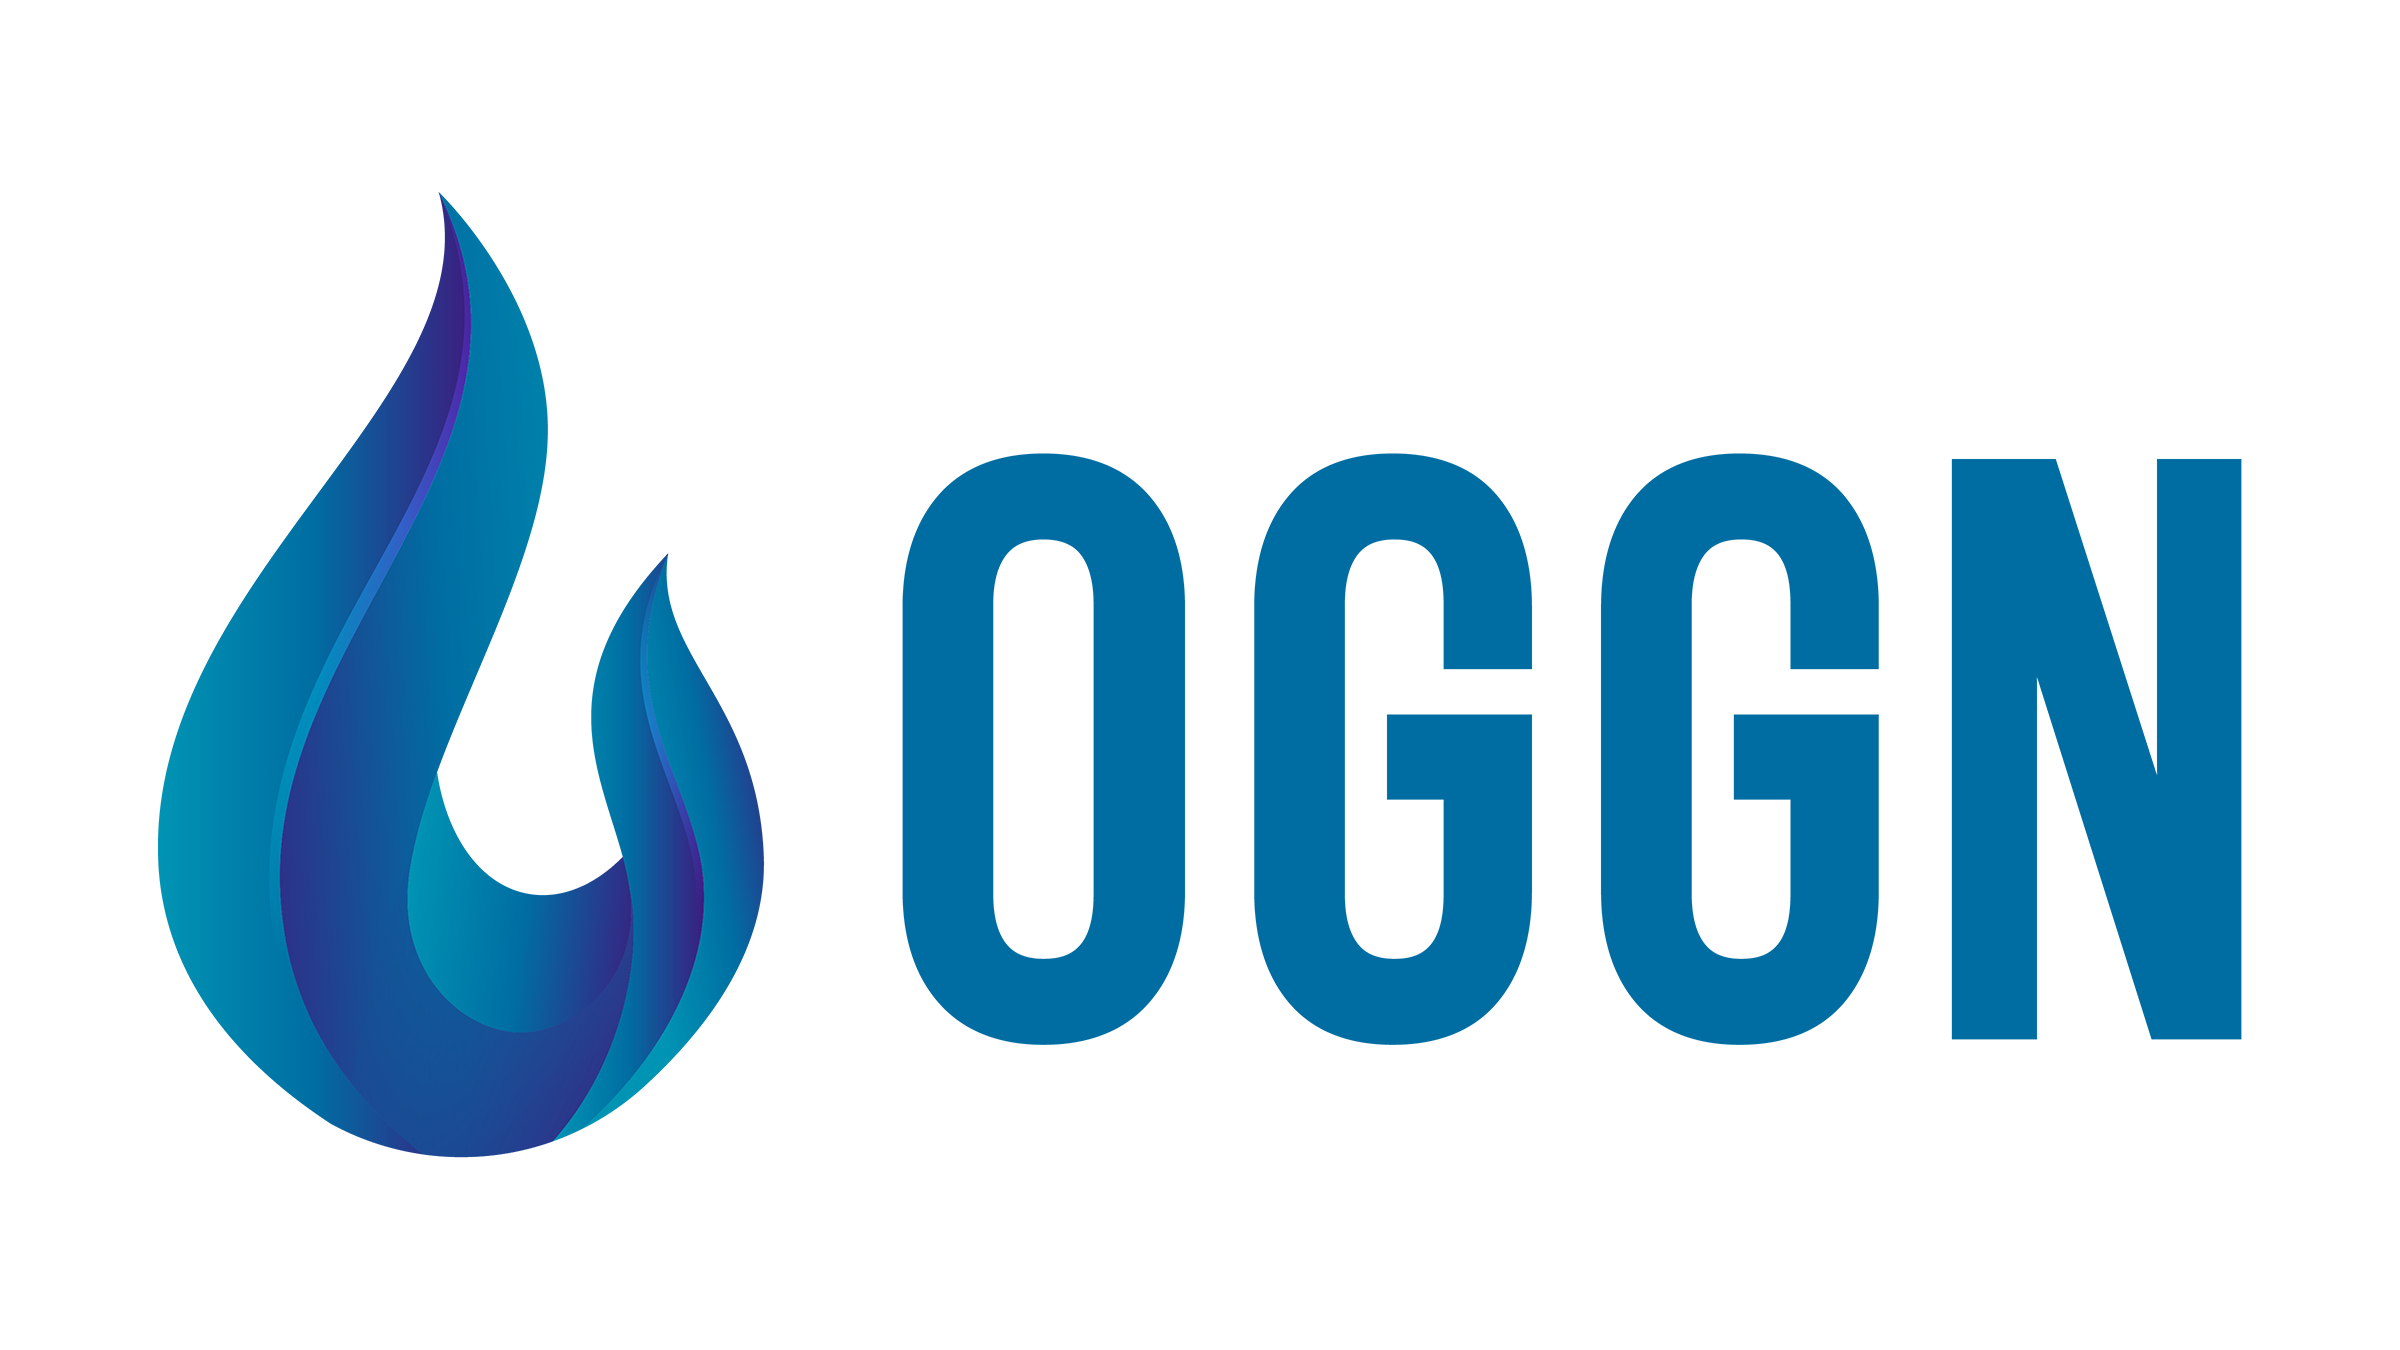 Oil & Gas Global Network logo